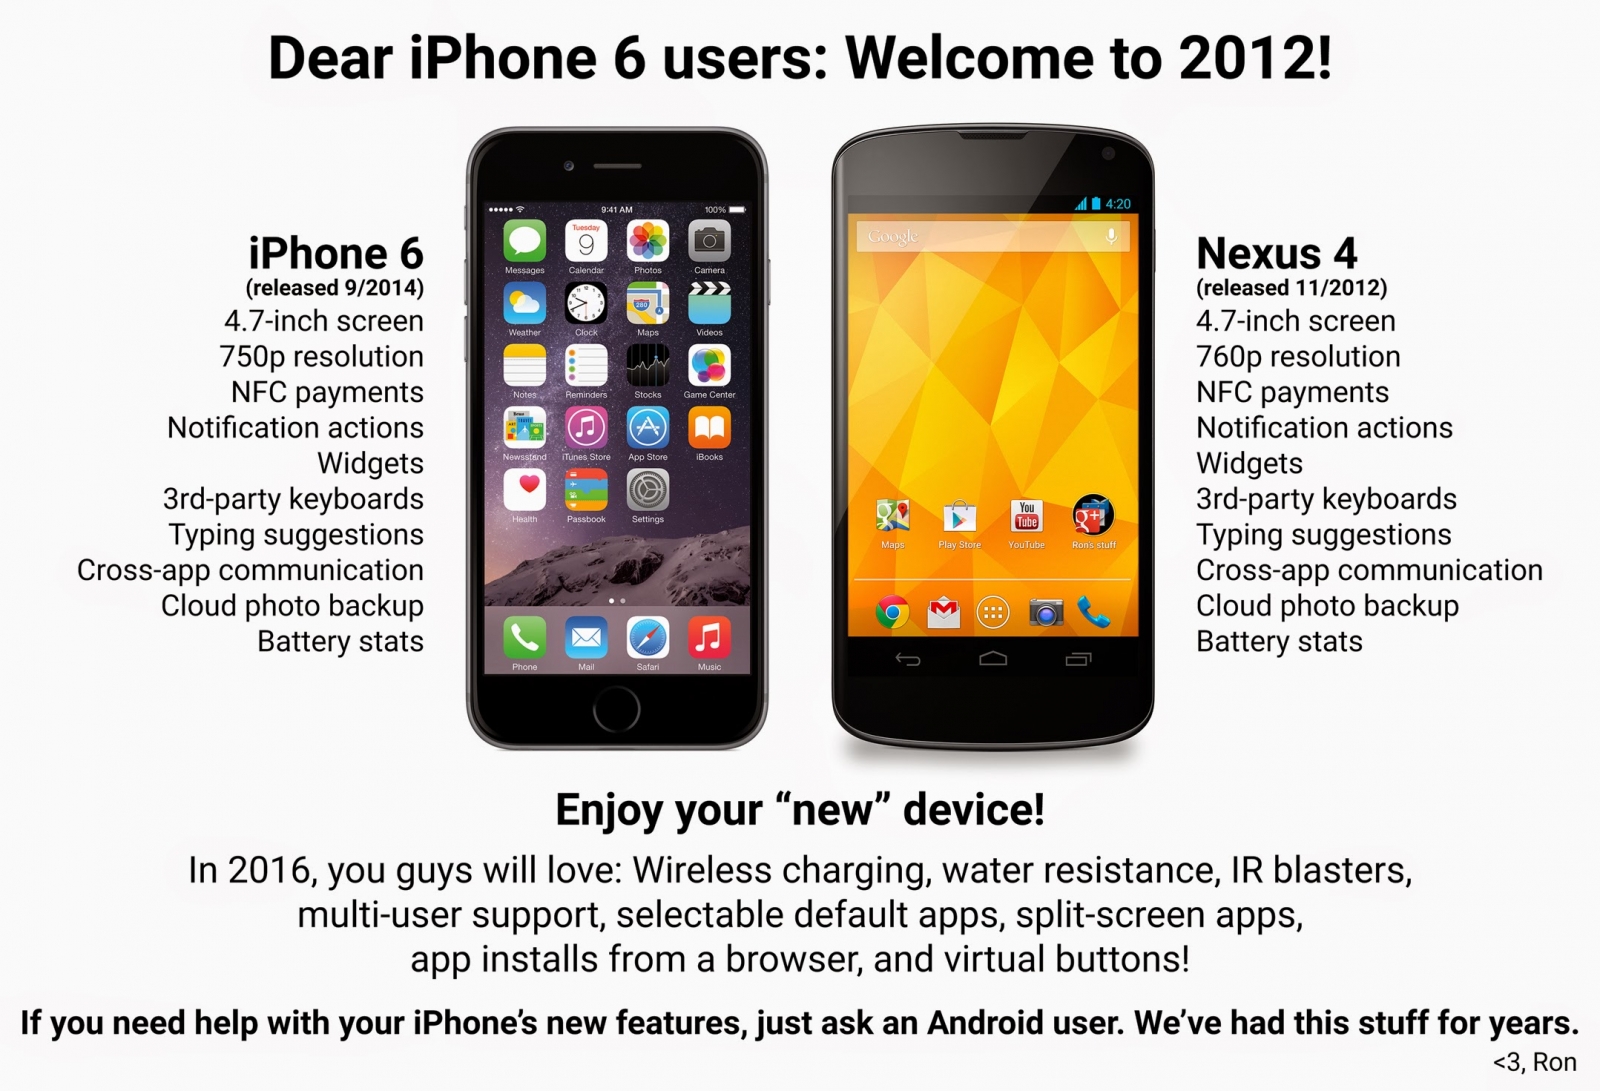 iphone-6-users-welcome-2012-meme.jpg?w=720&h=491&l=50&t=40